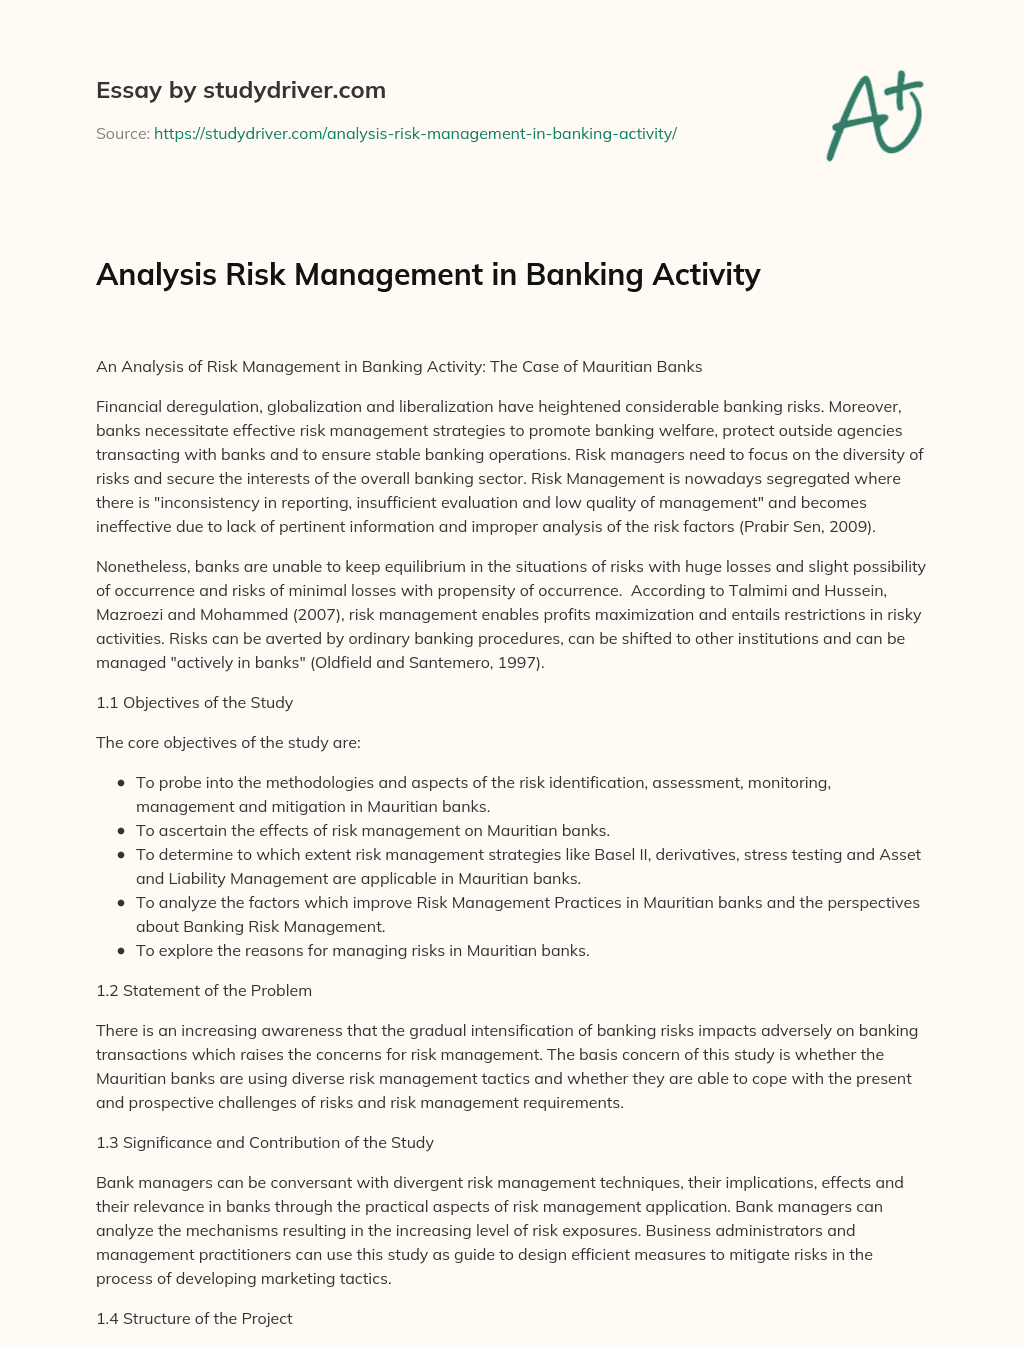 Analysis Risk Management in Banking Activity essay